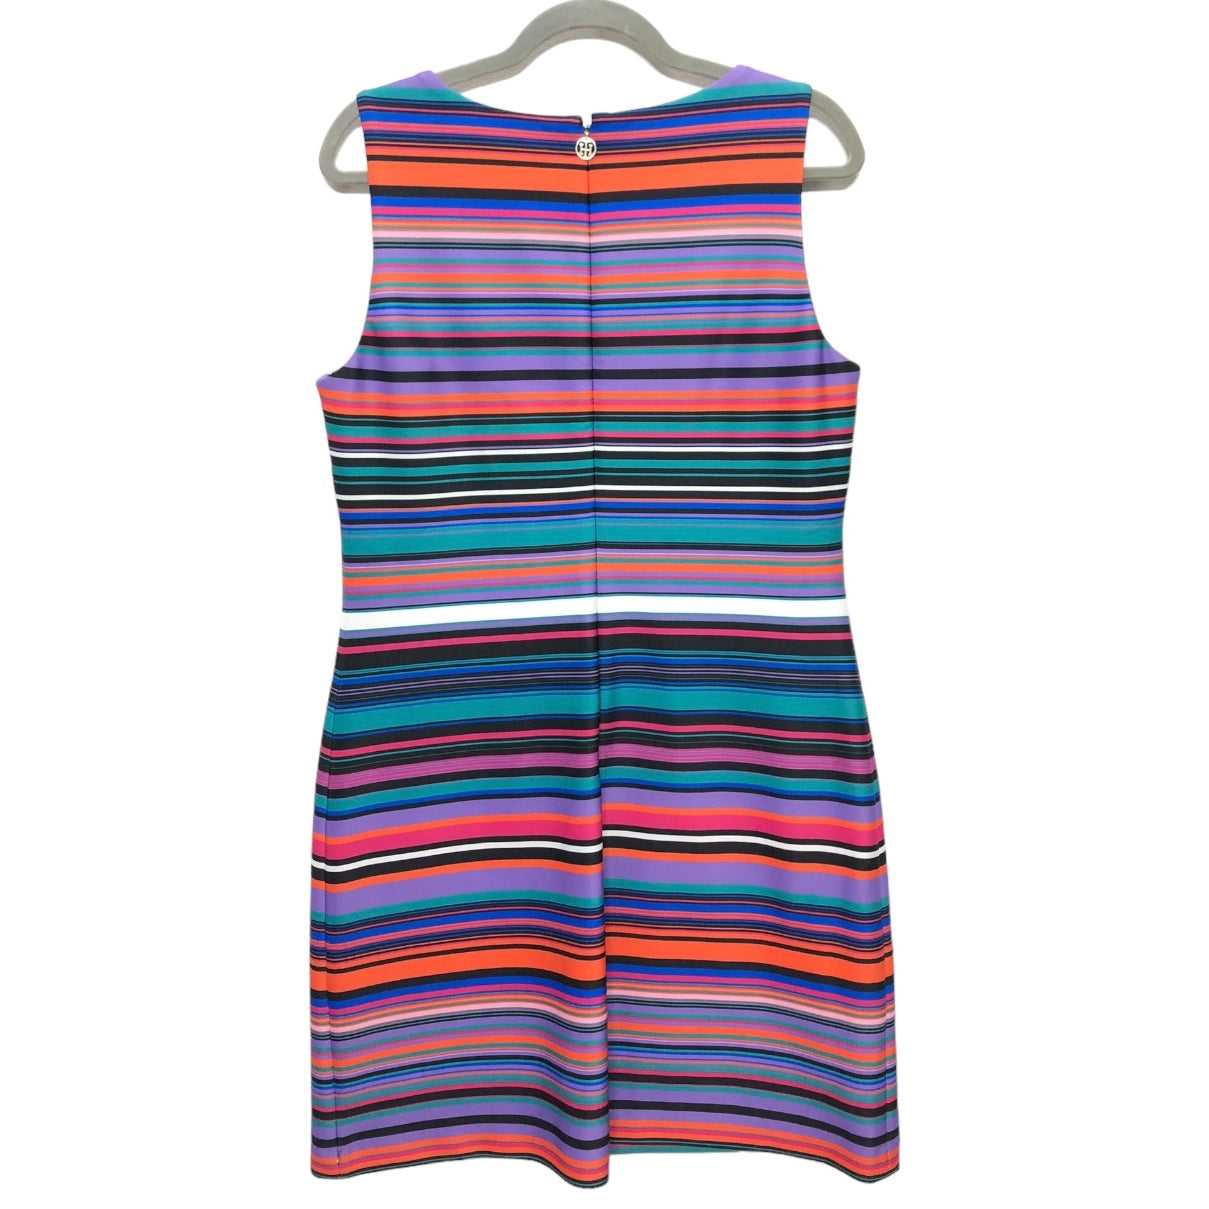 Striped Pattern Dress Casual Short Tommy Hilfiger, Size 12